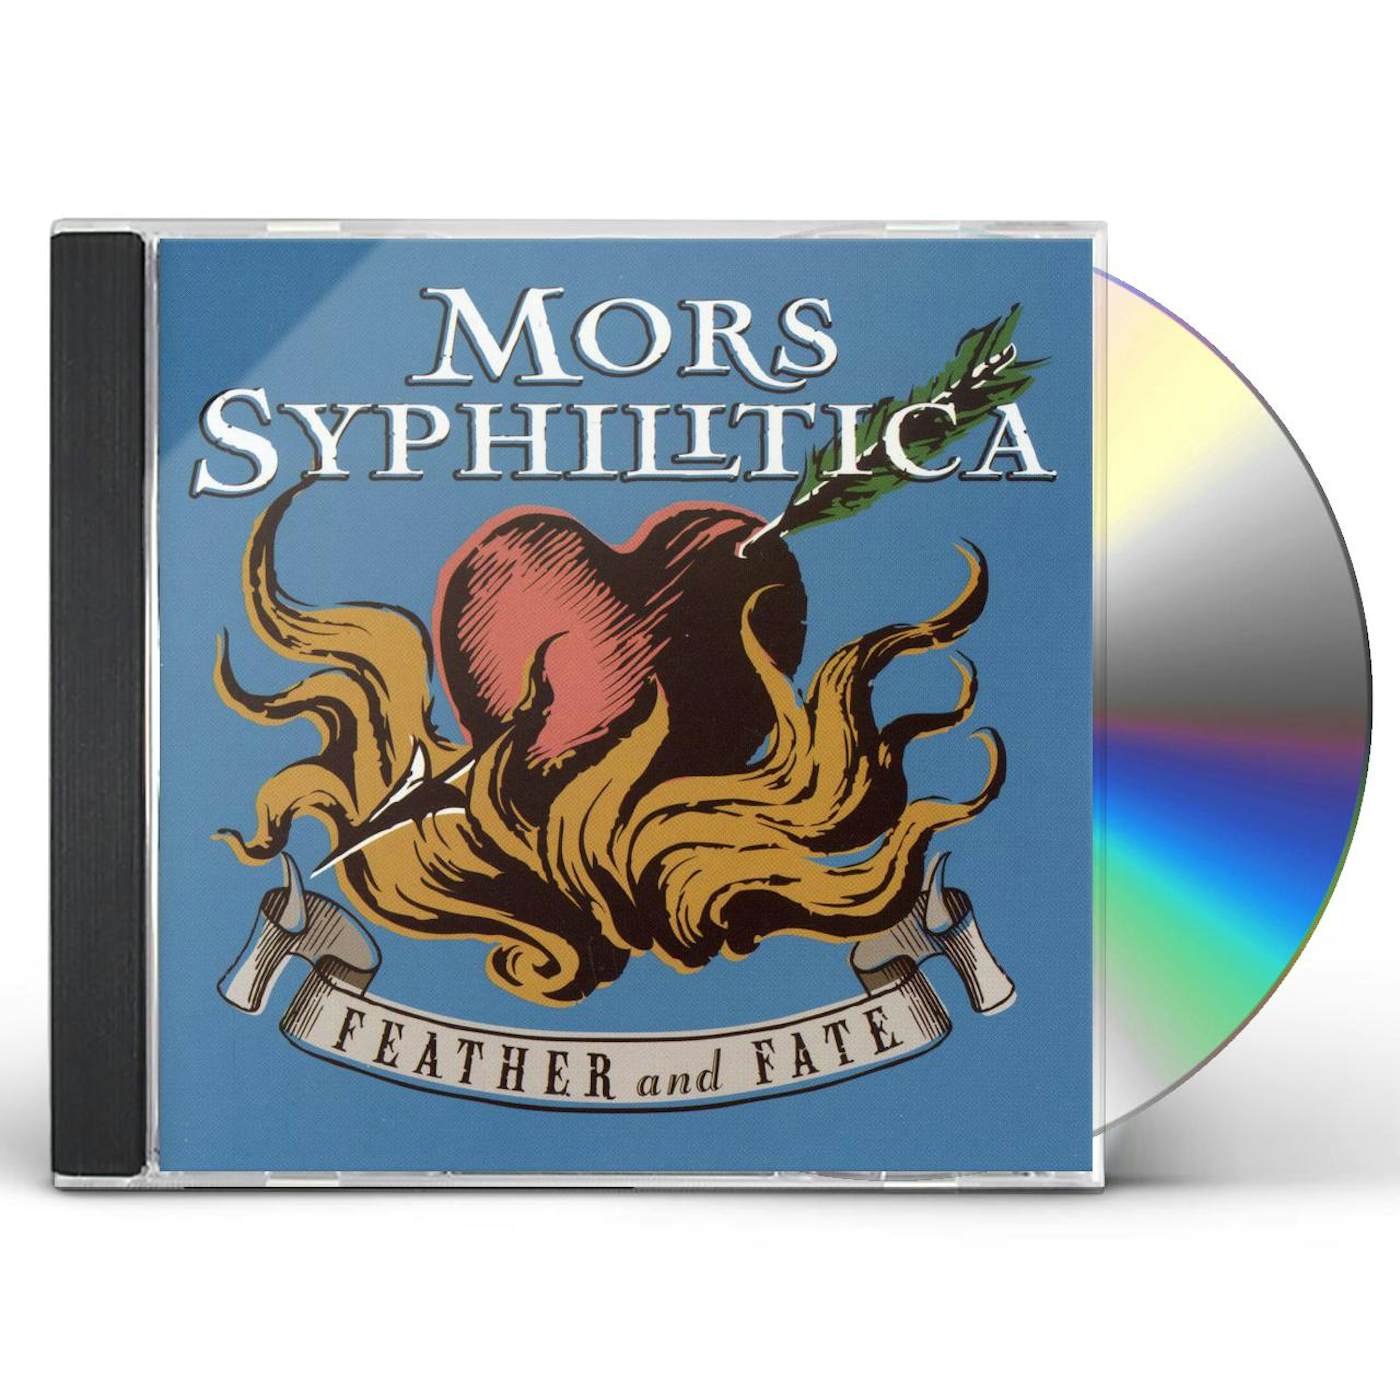 Mors Syphilitica FEATHER & FATE CD